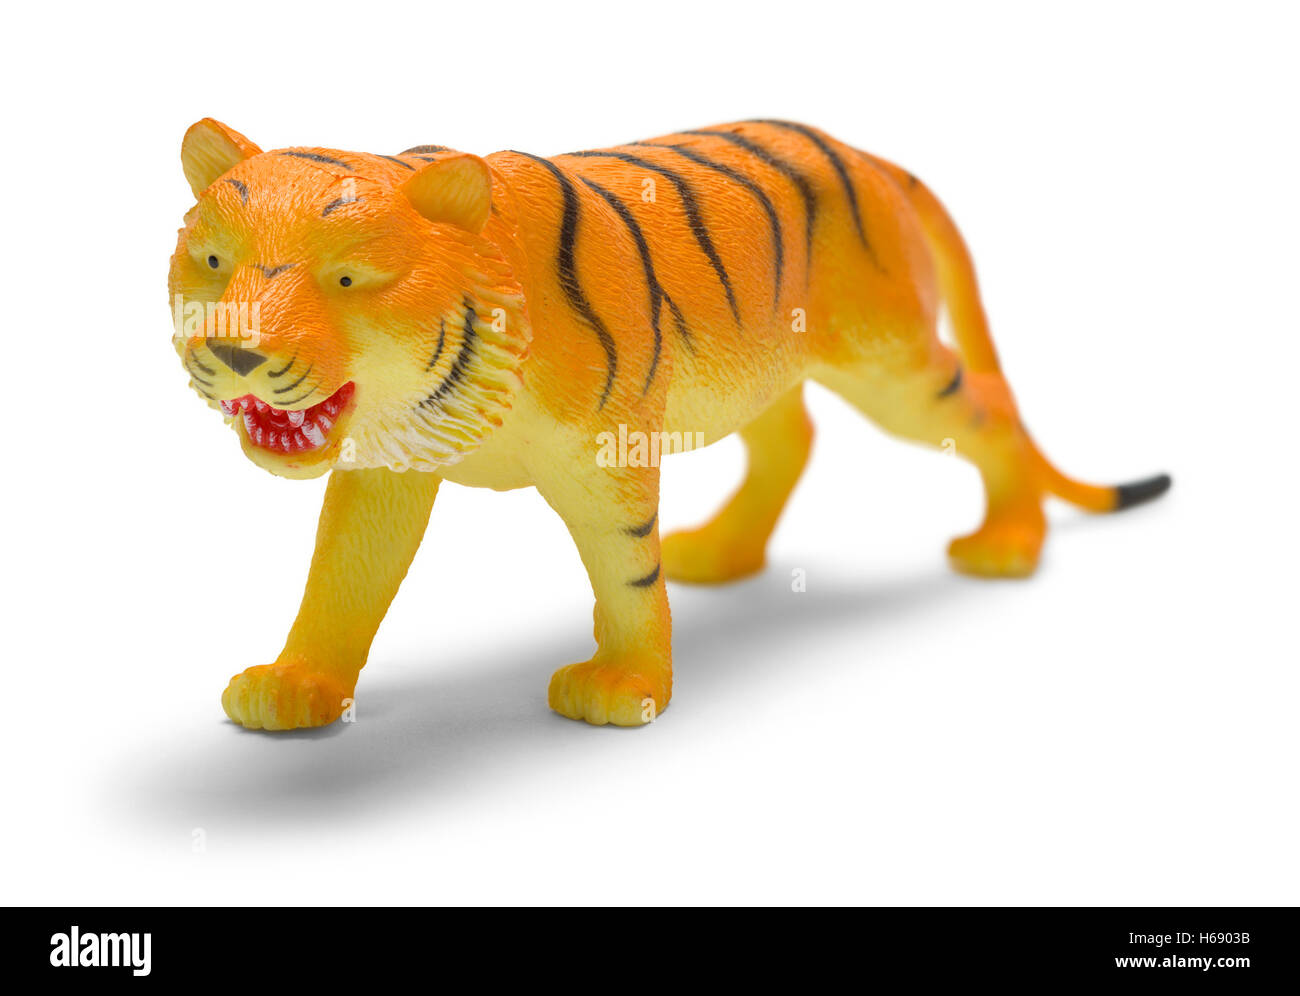 Kunststoff Tiger Spielzeug, Isolated on White Background. Stockfoto